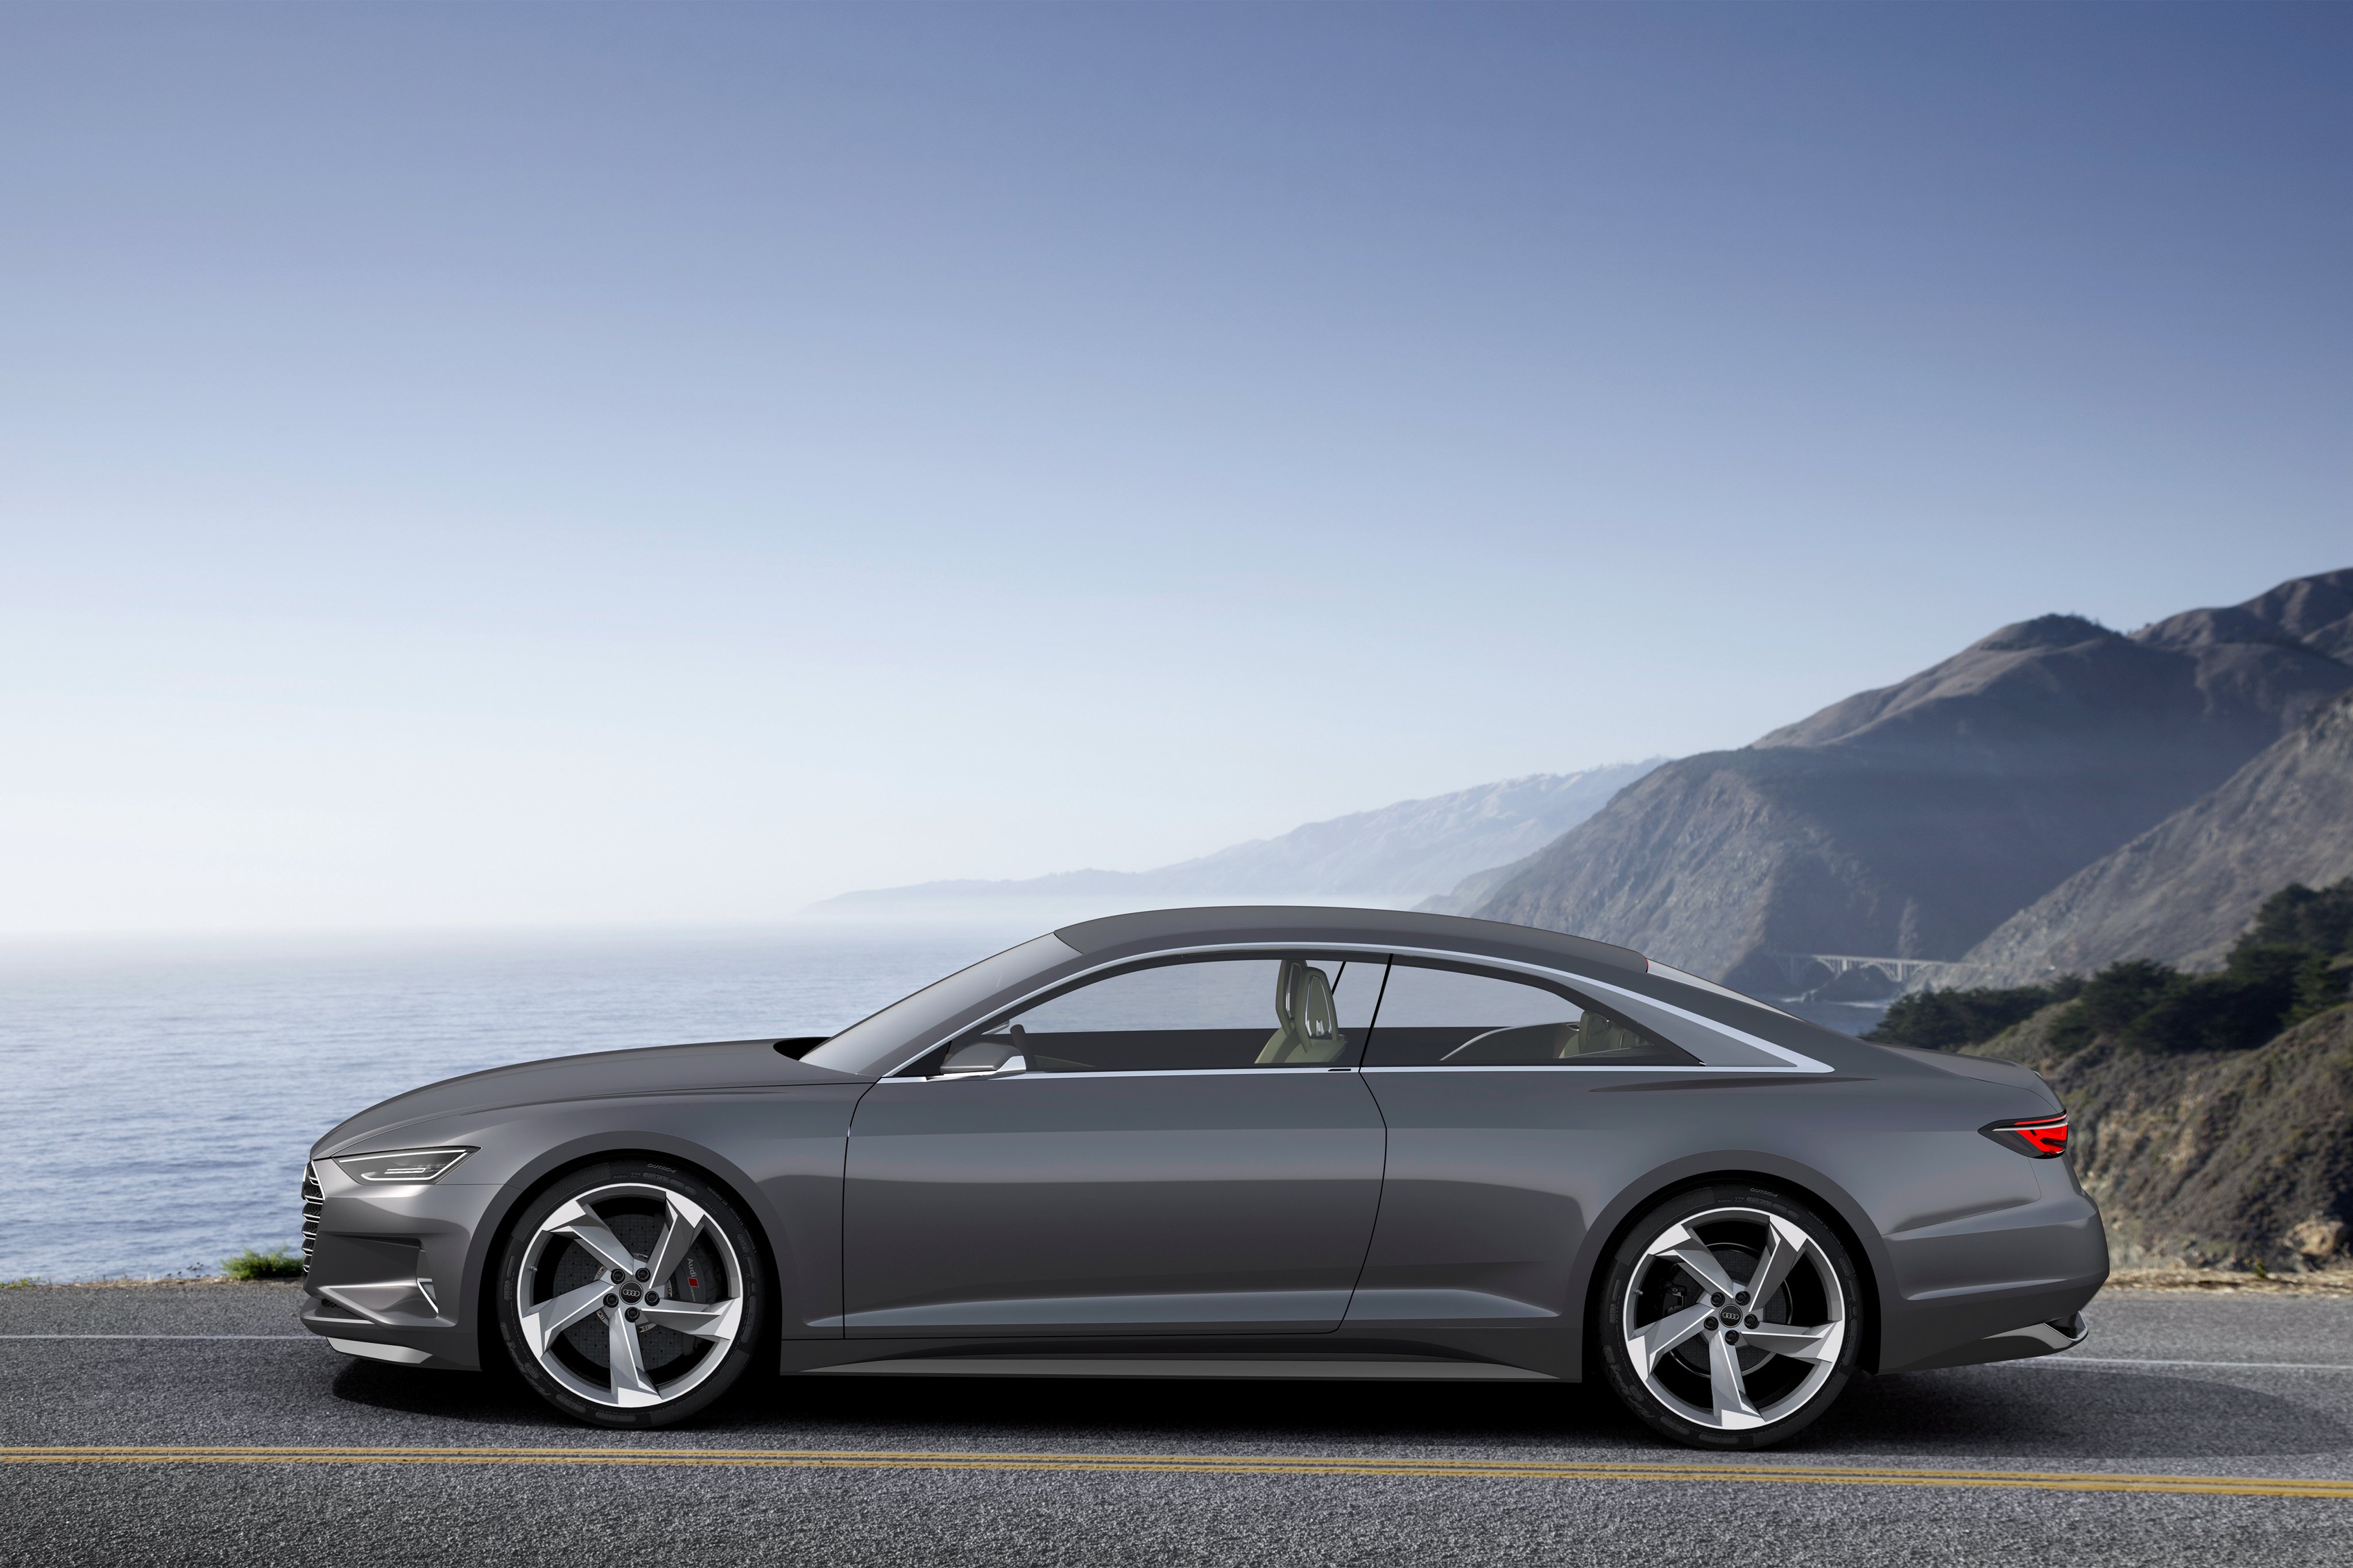 2015, Audi, Prologue, Concept, Electric Wallpaper